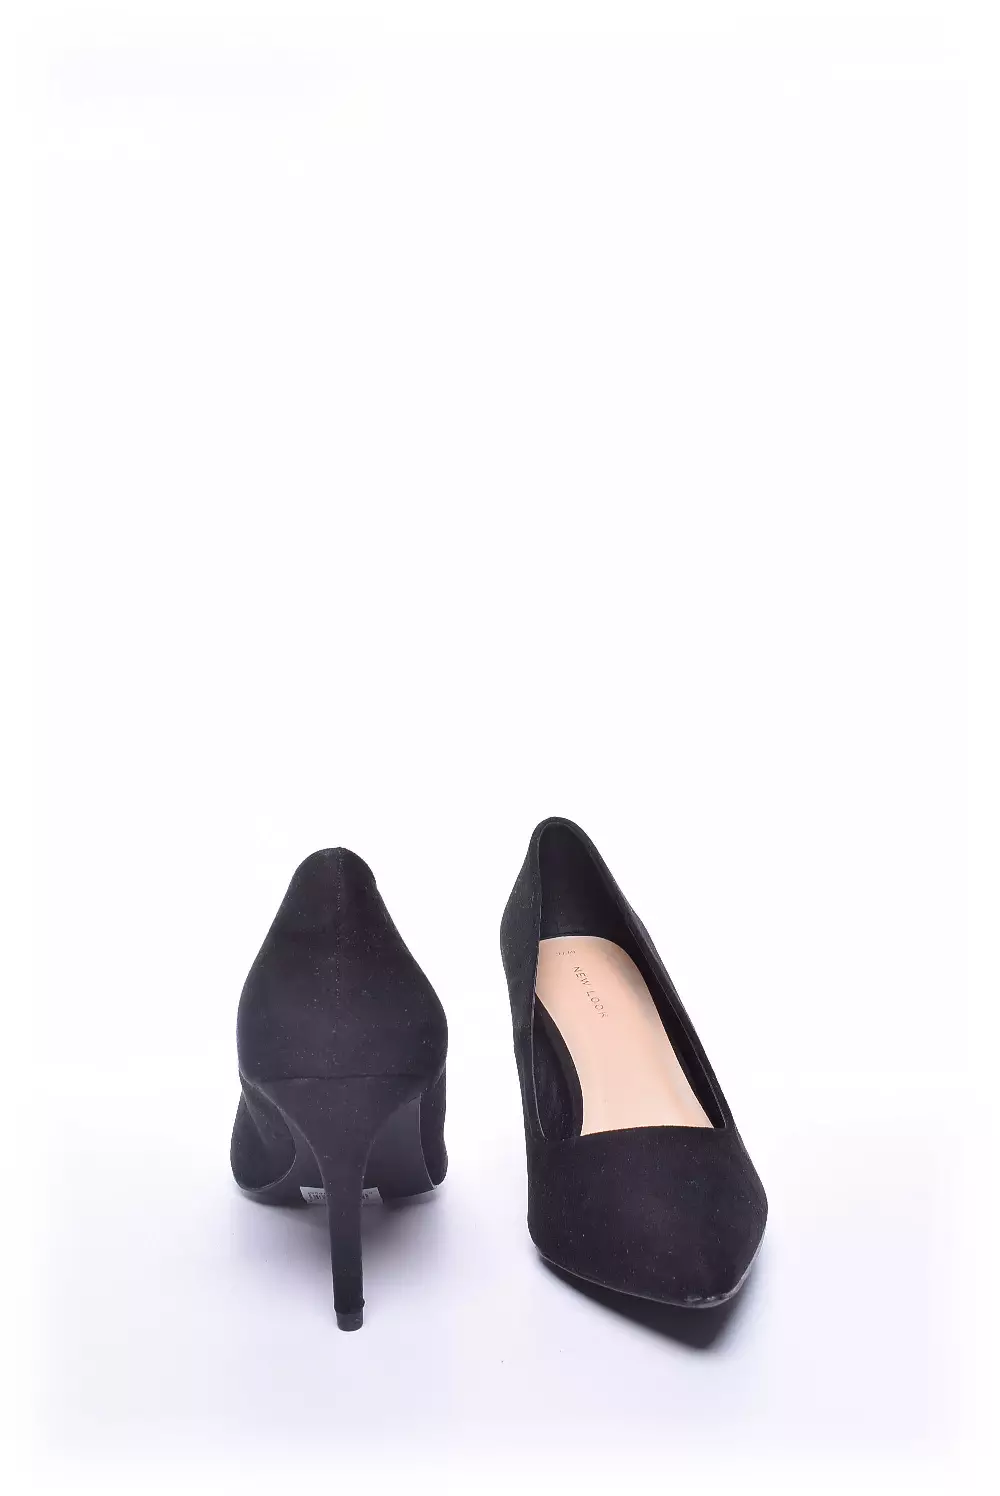 Pantofi dama stiletto [4]